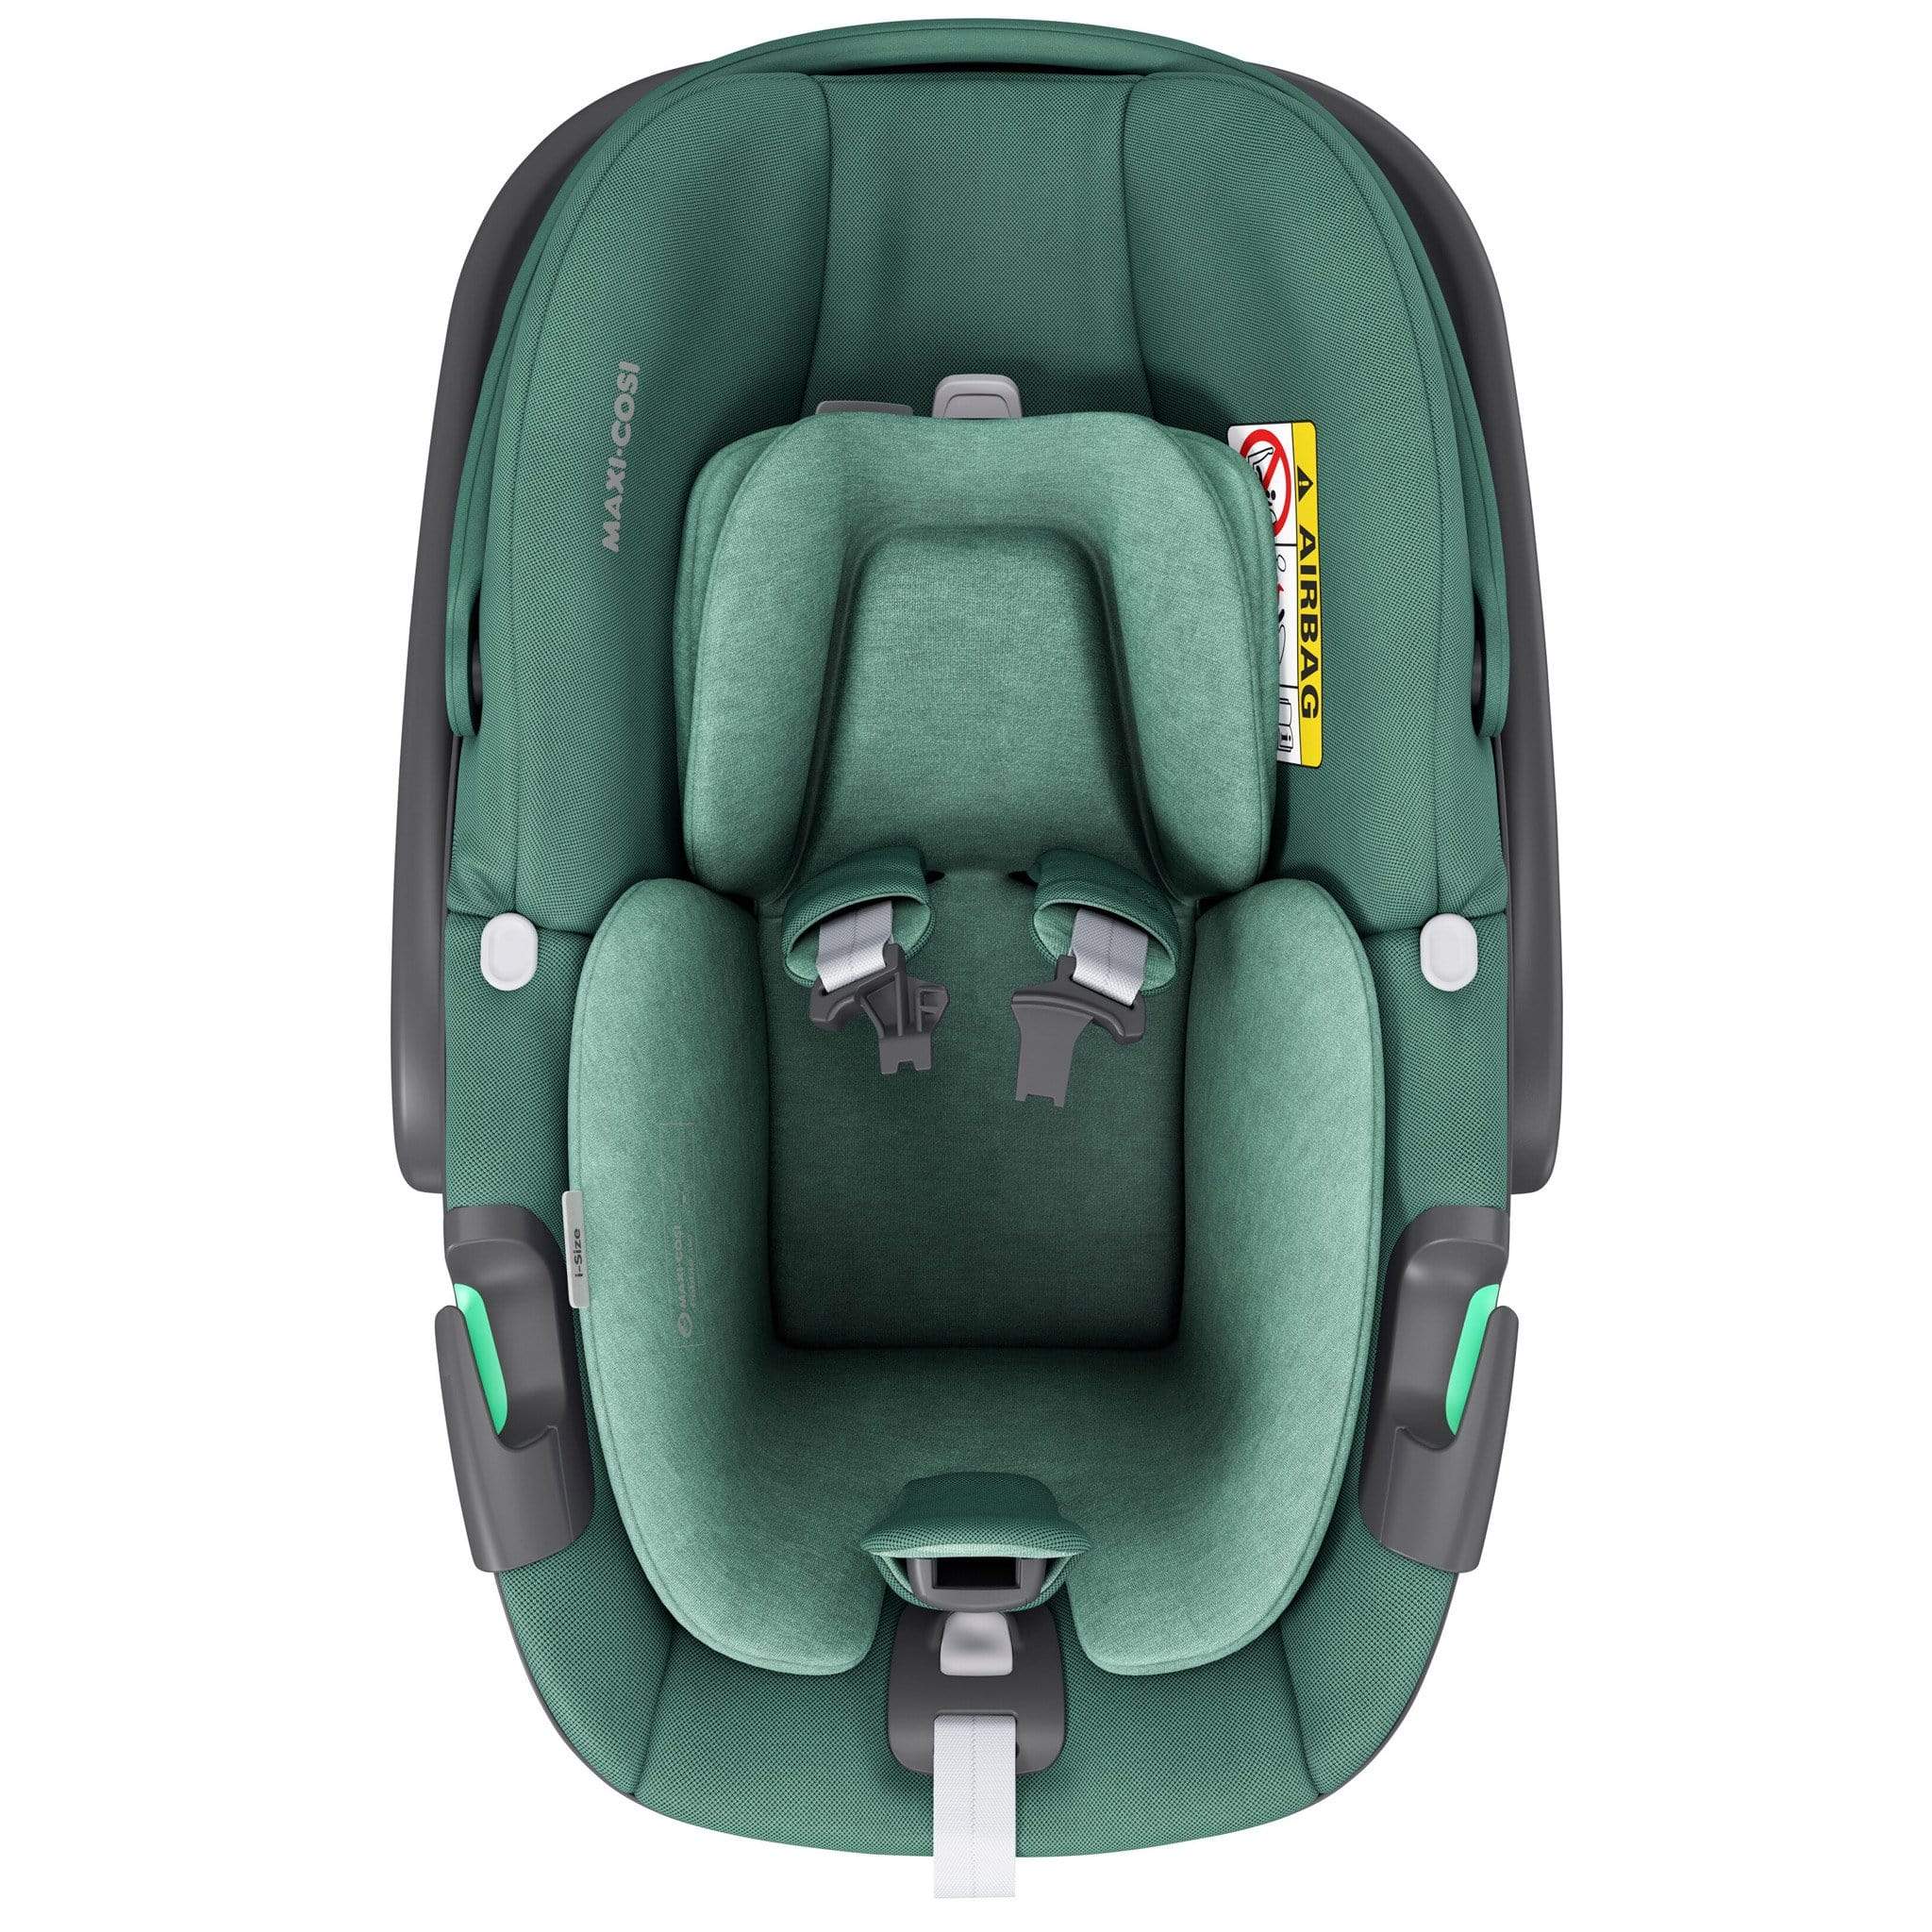 Maxi Cosi Pebble 360 & Family Fix 360 Base Bundle Essential Green i-Size Car Seats 8339-ESS-GRN 8712930170518